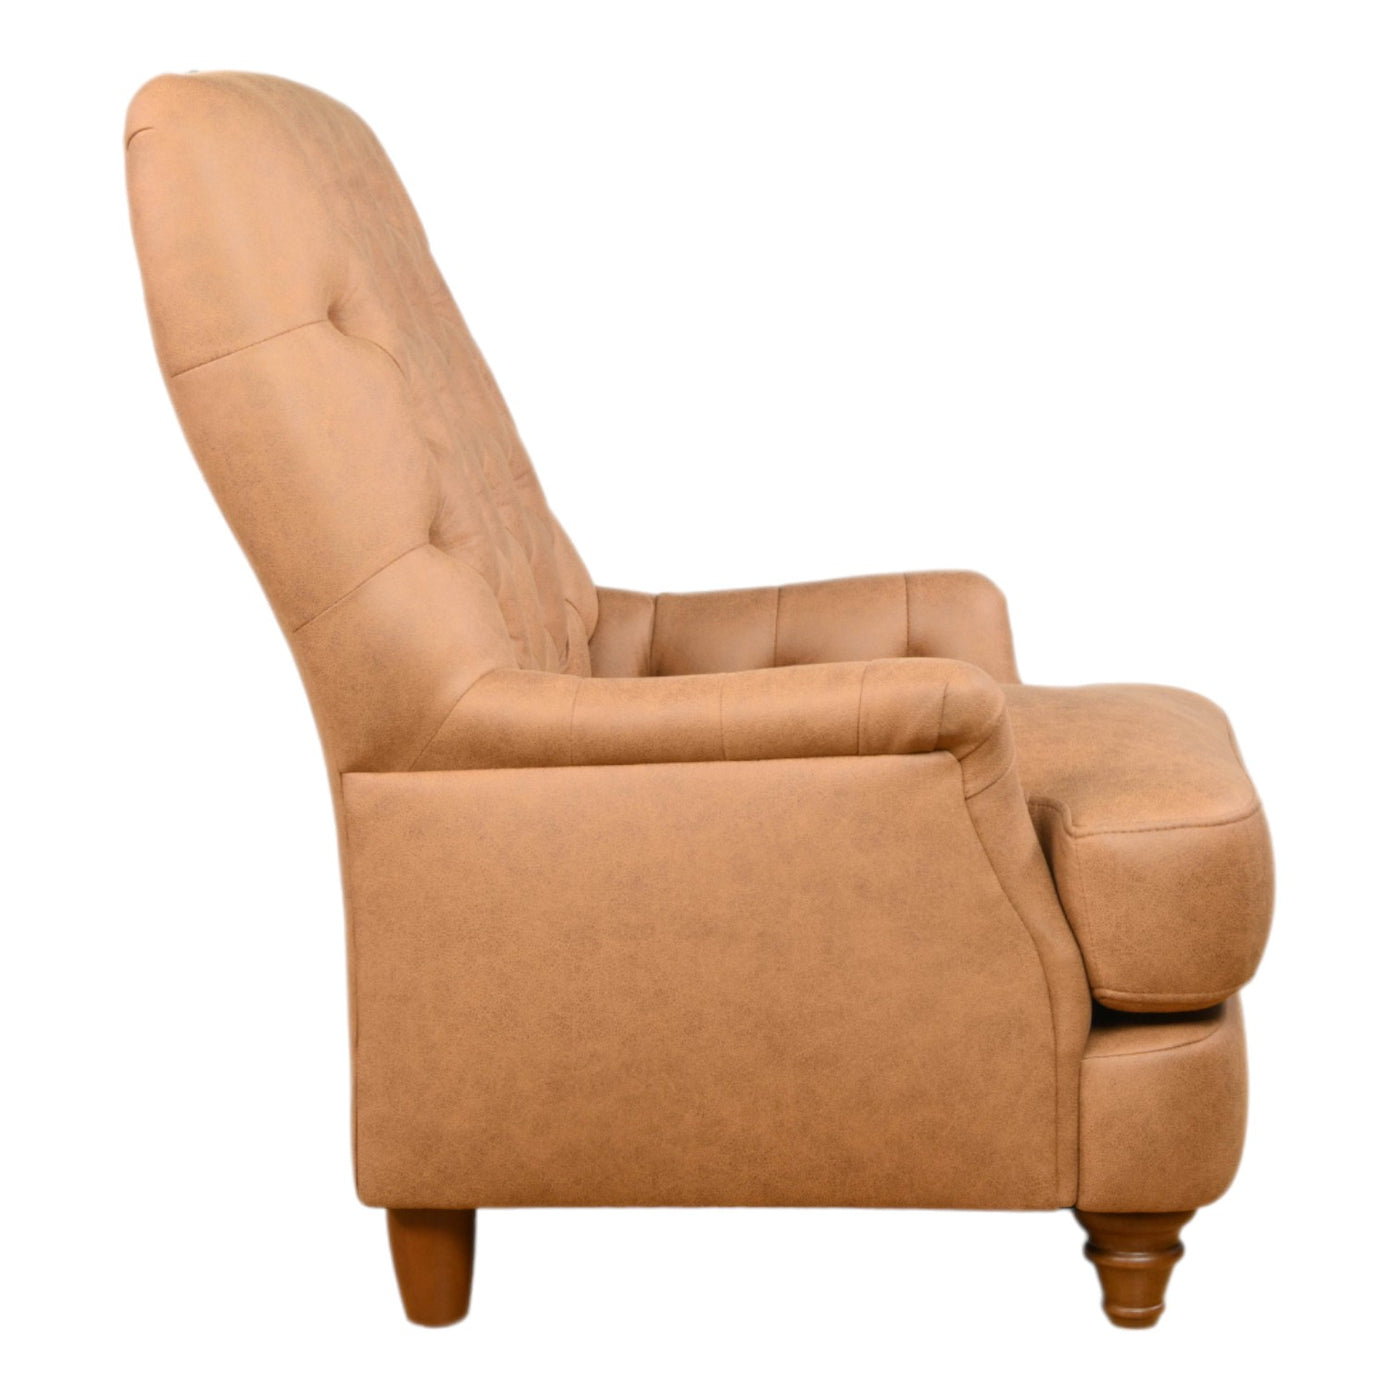 Buckingham Chair Tan Leather Look - Future Classics Furniture